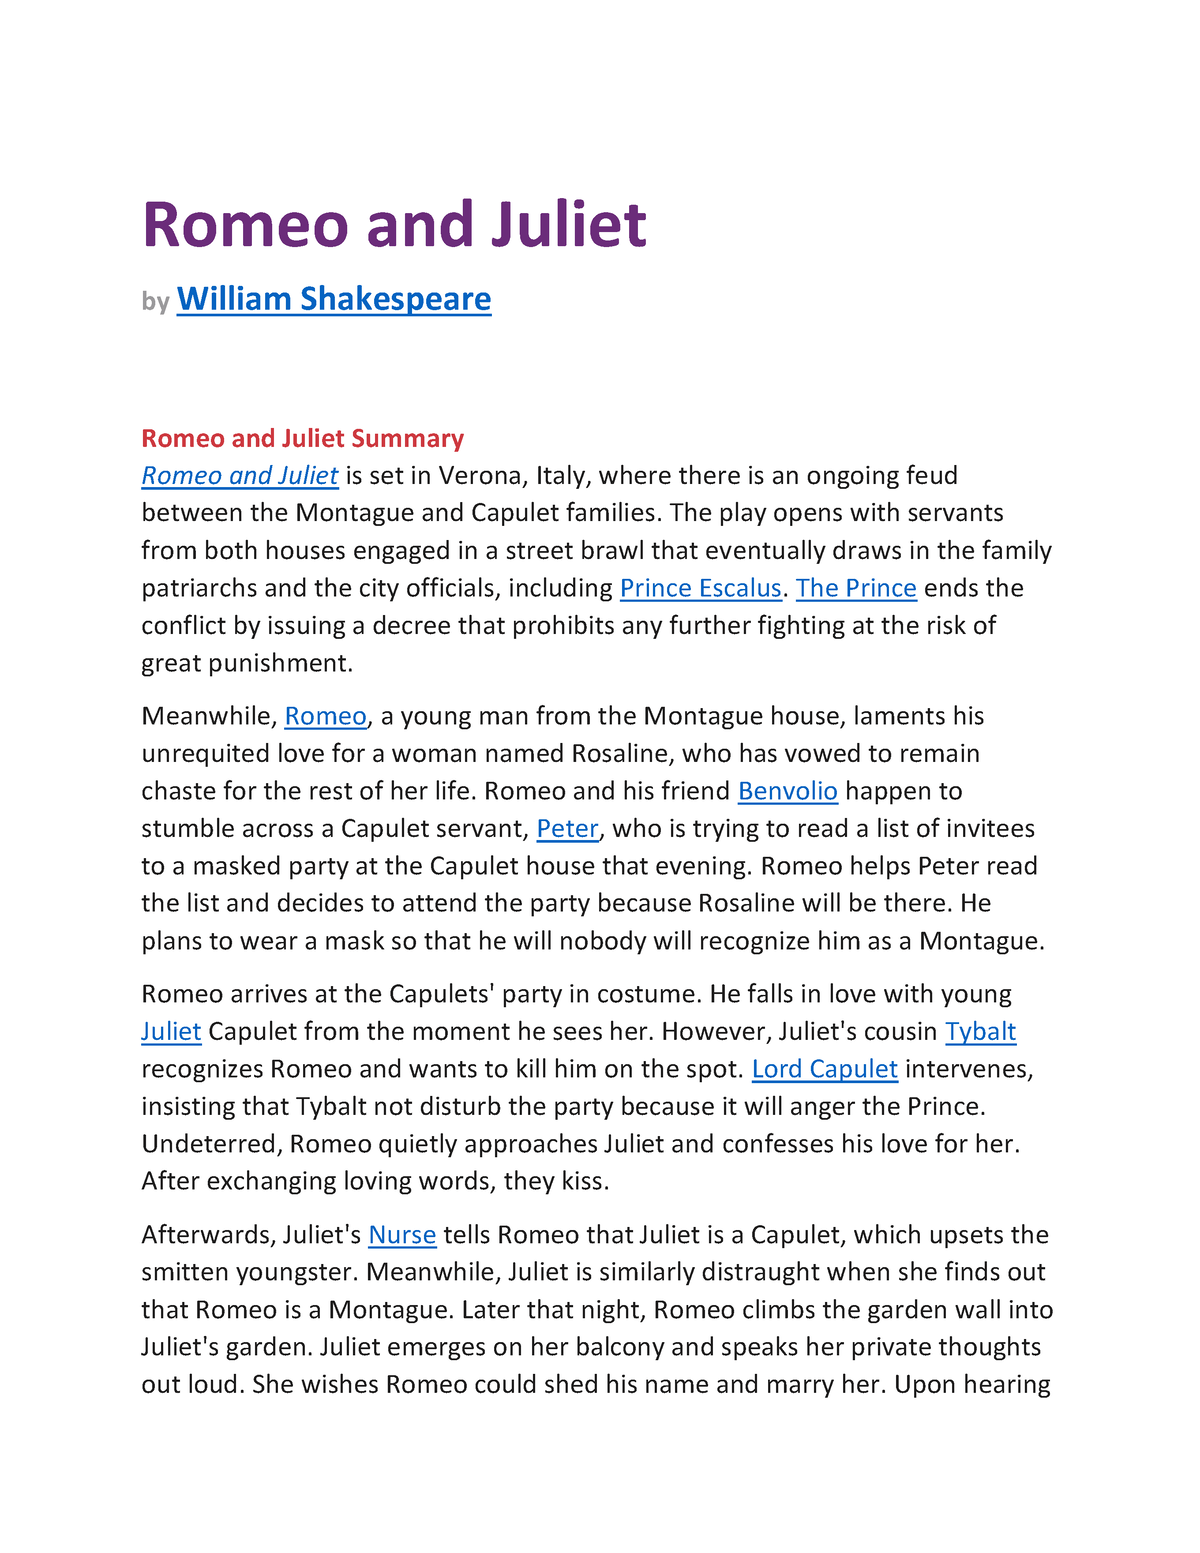 romeo and juliet summary essay 200 words